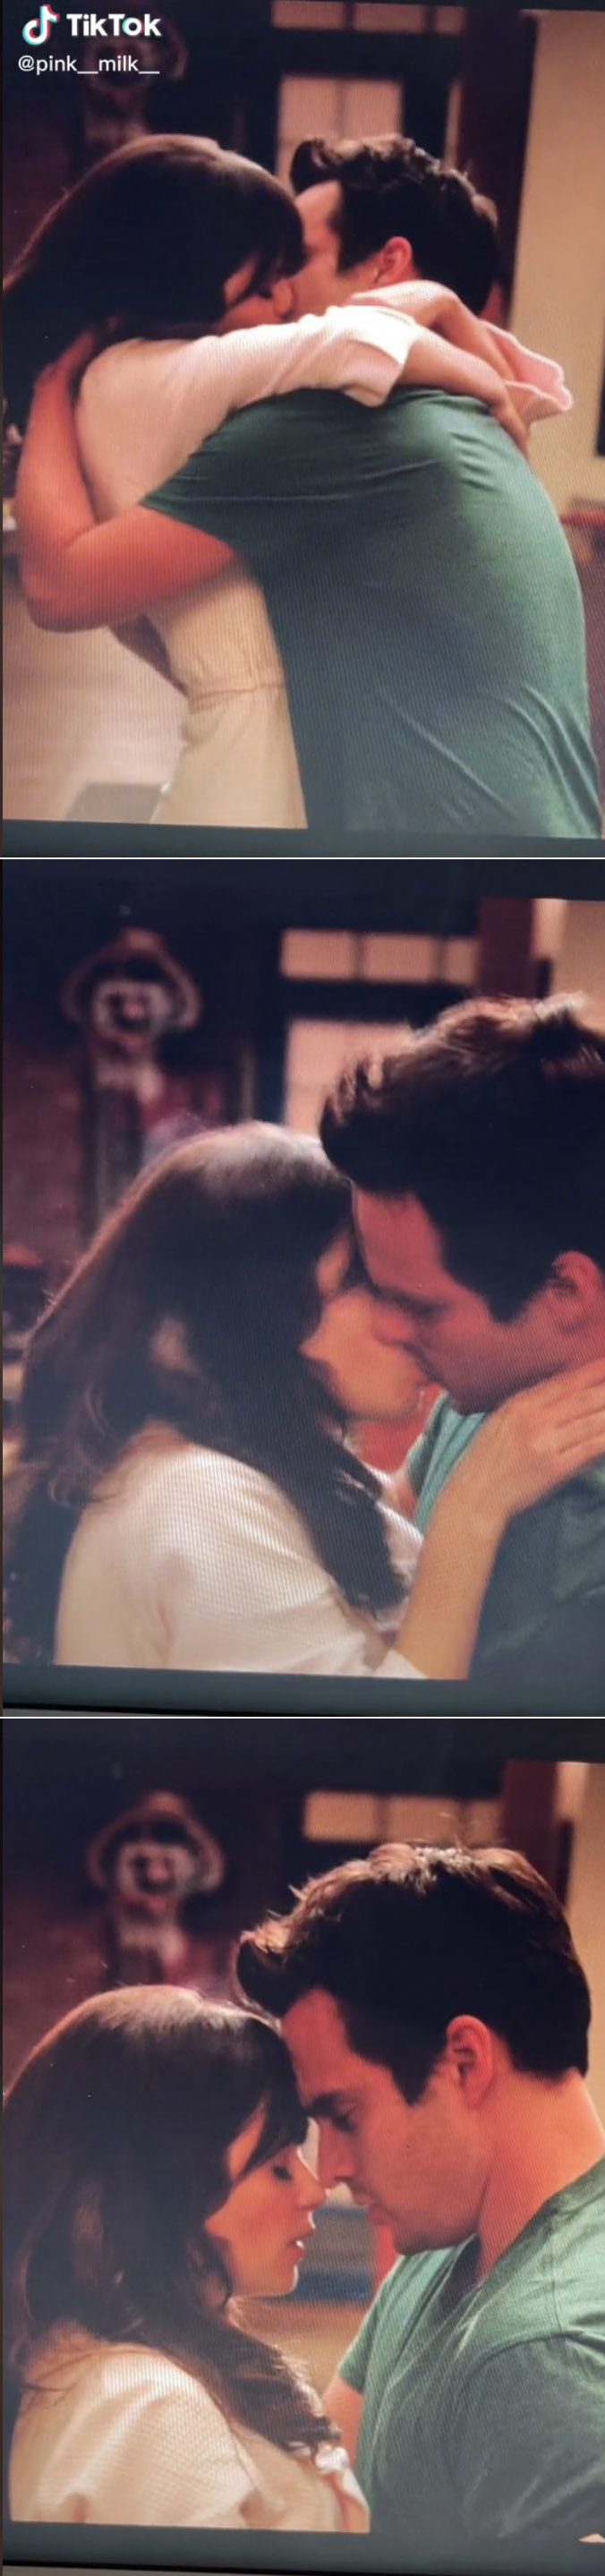 Jess and Nick kissing